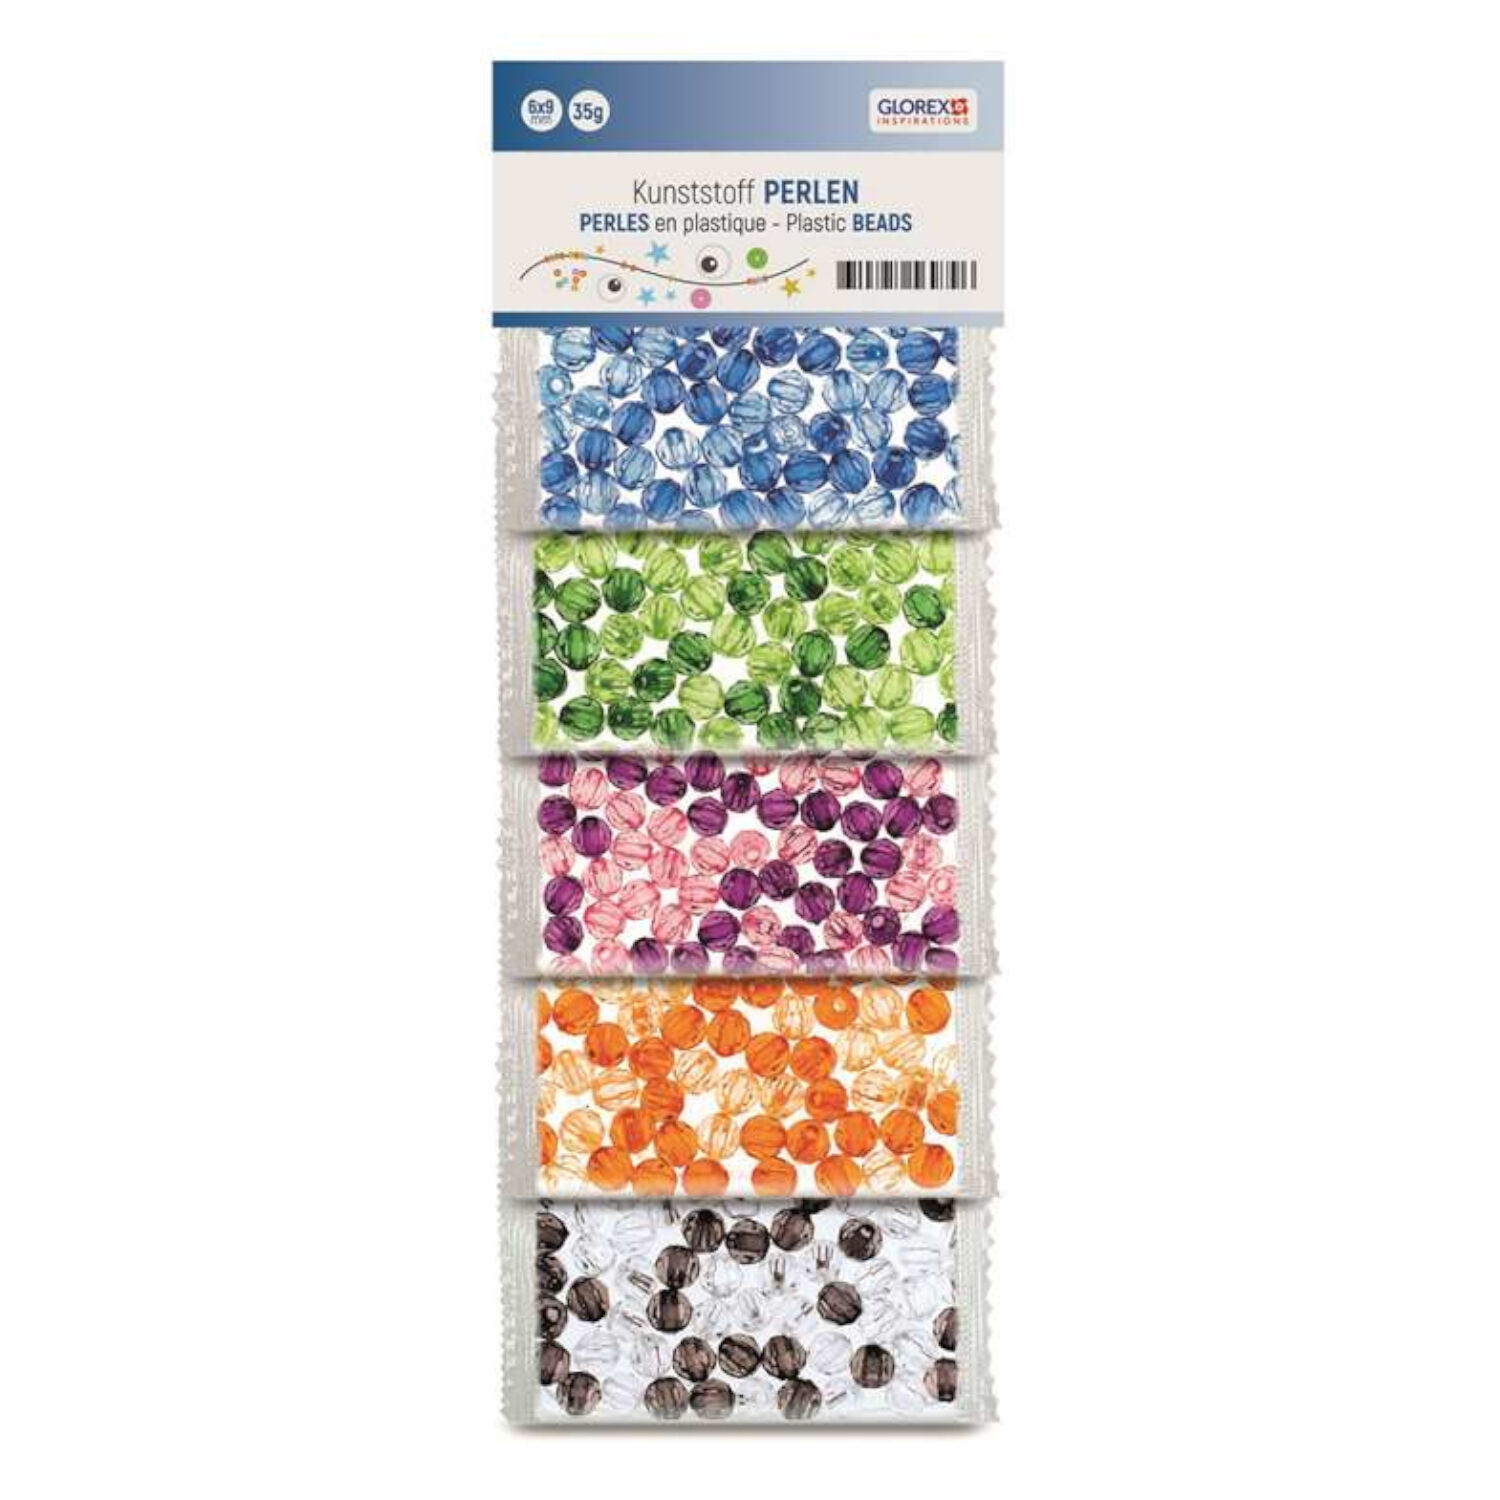 NEU Kunststoffperlen-Mix, 6 mm, 50 g, transparent bunt in 5 Farben